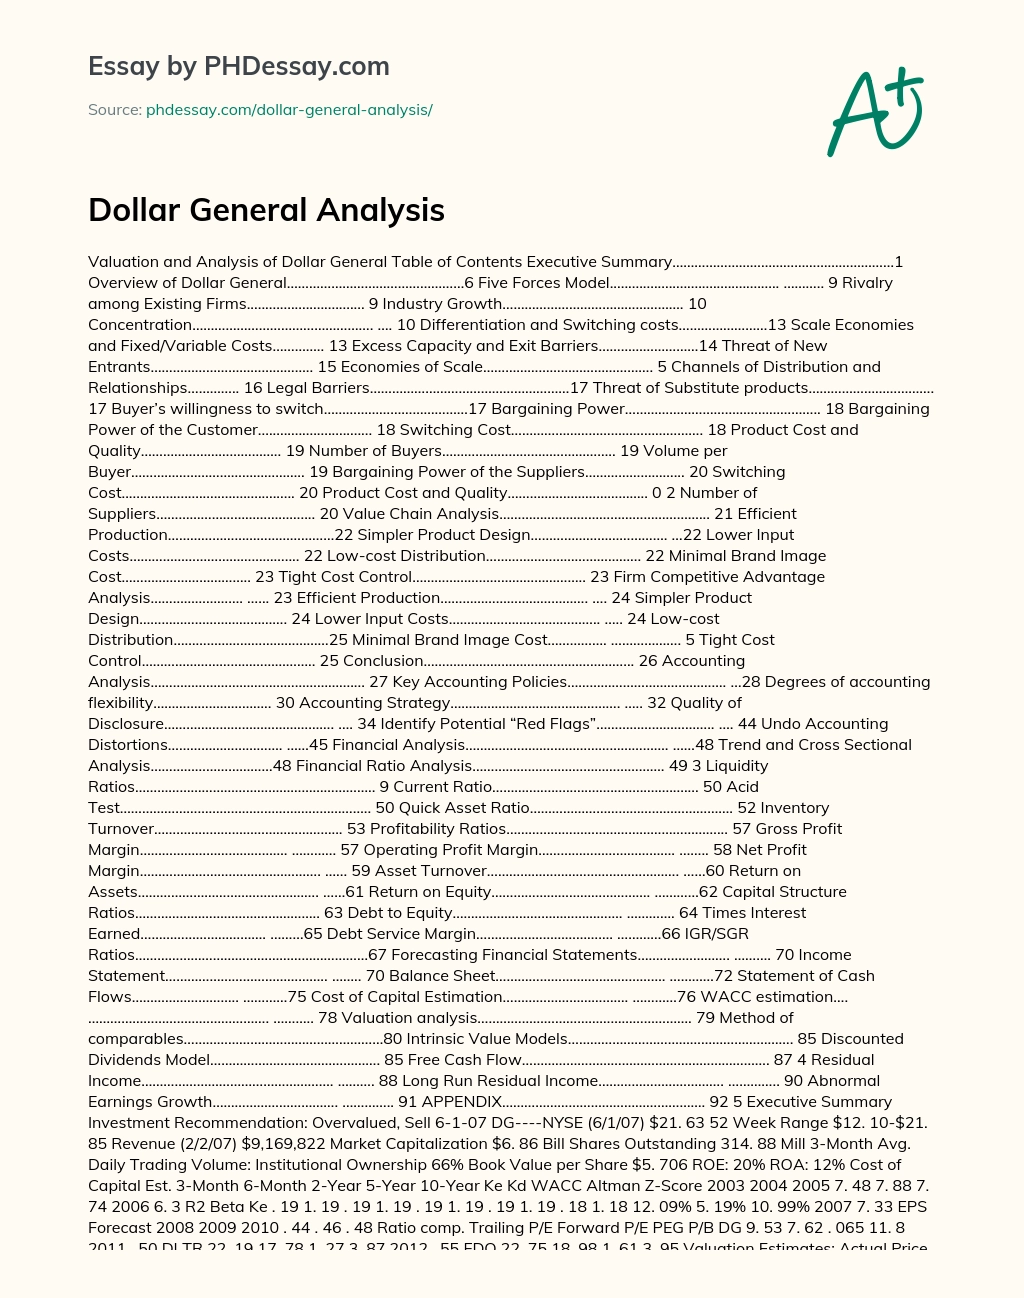 Dollar General Analysis essay